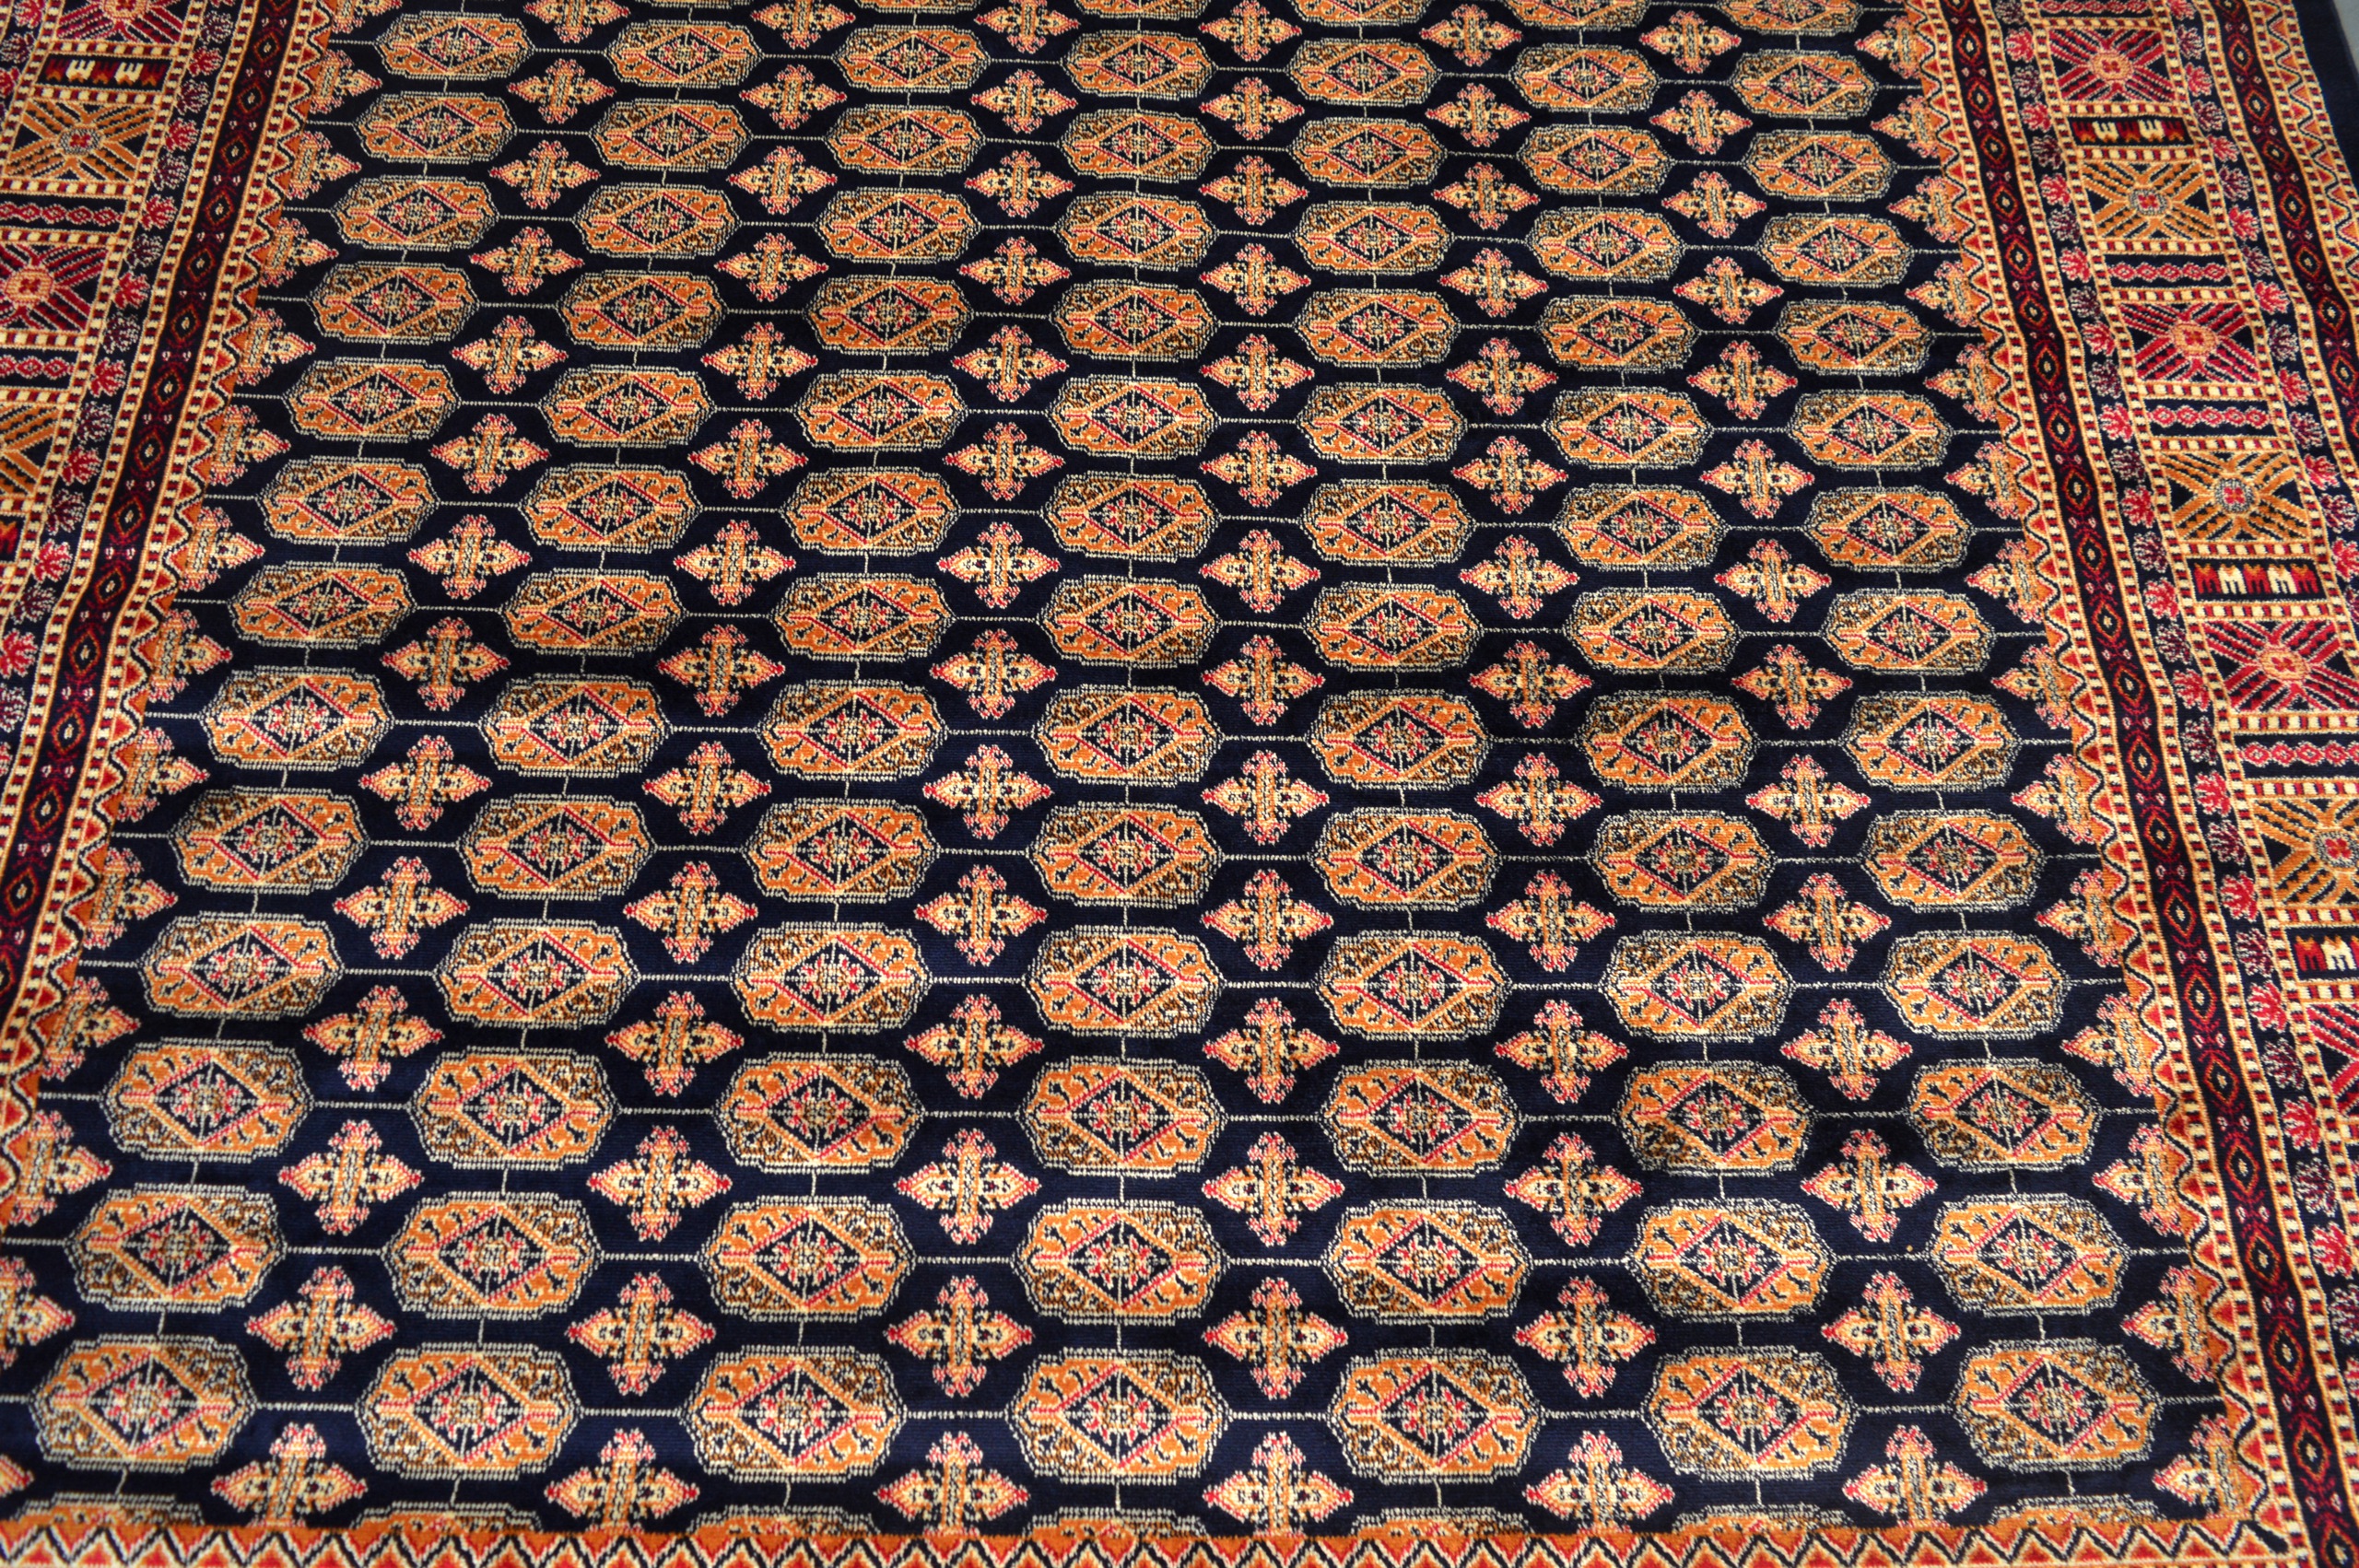 A BLUE GROUND BOKHARA CARPET. 2.8m x 2m. - Image 2 of 3